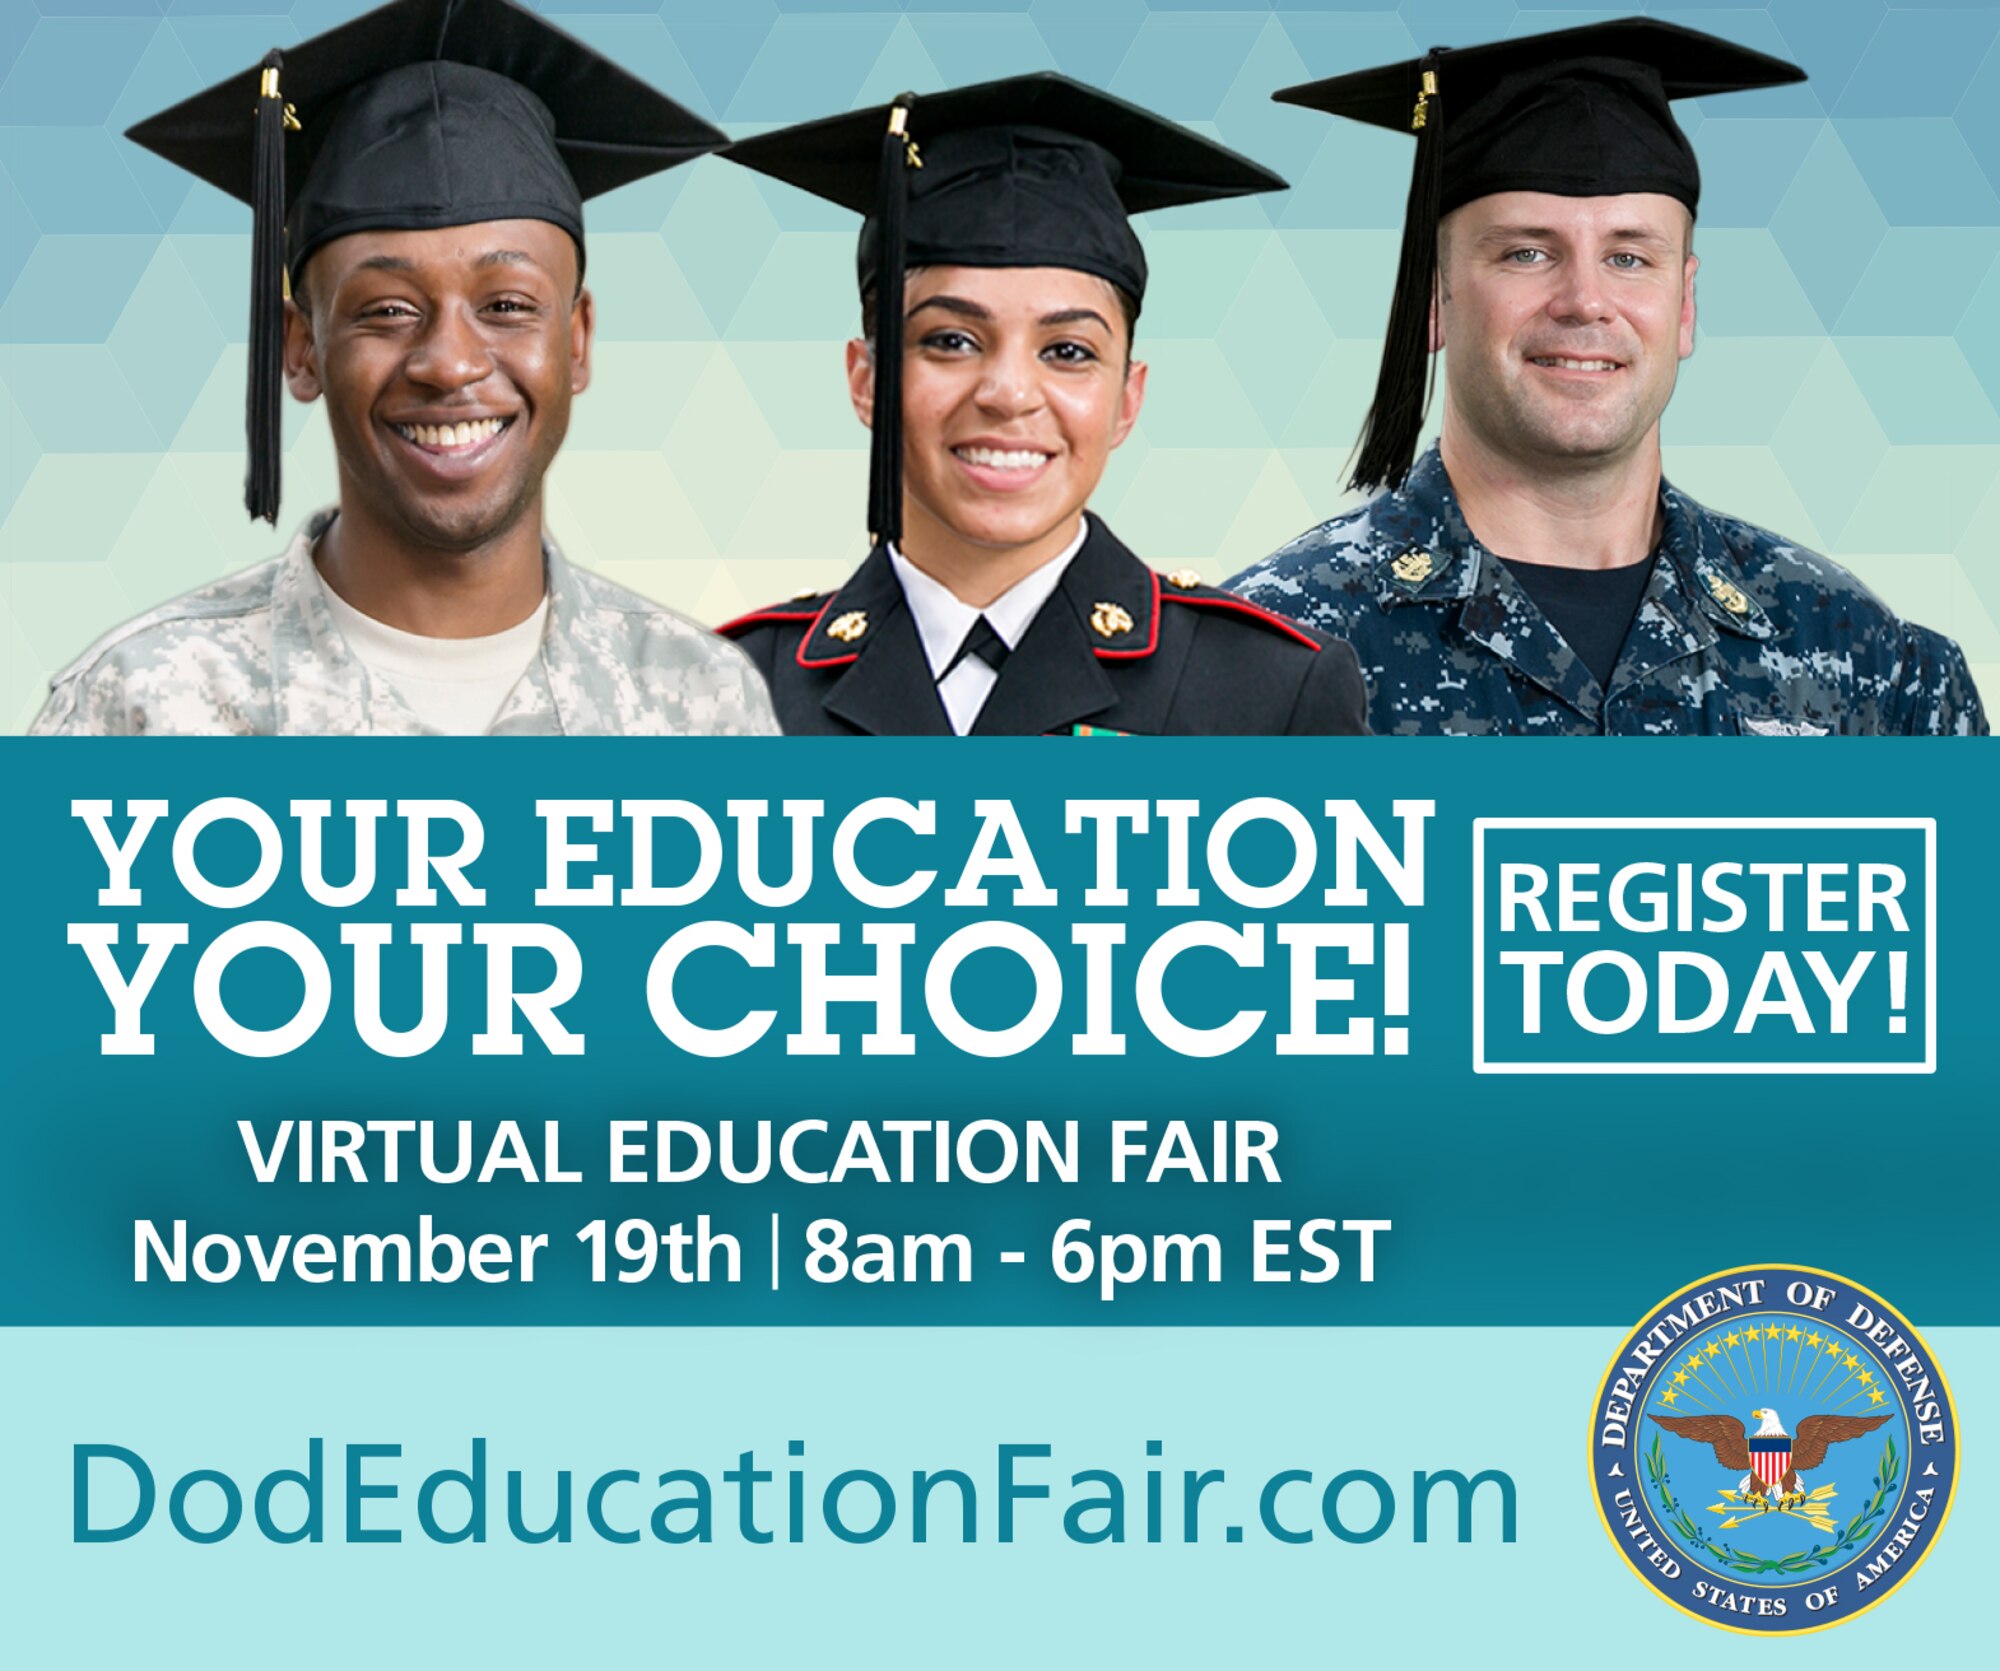 DOD VOLED to hold virtual education fair Nov. 19